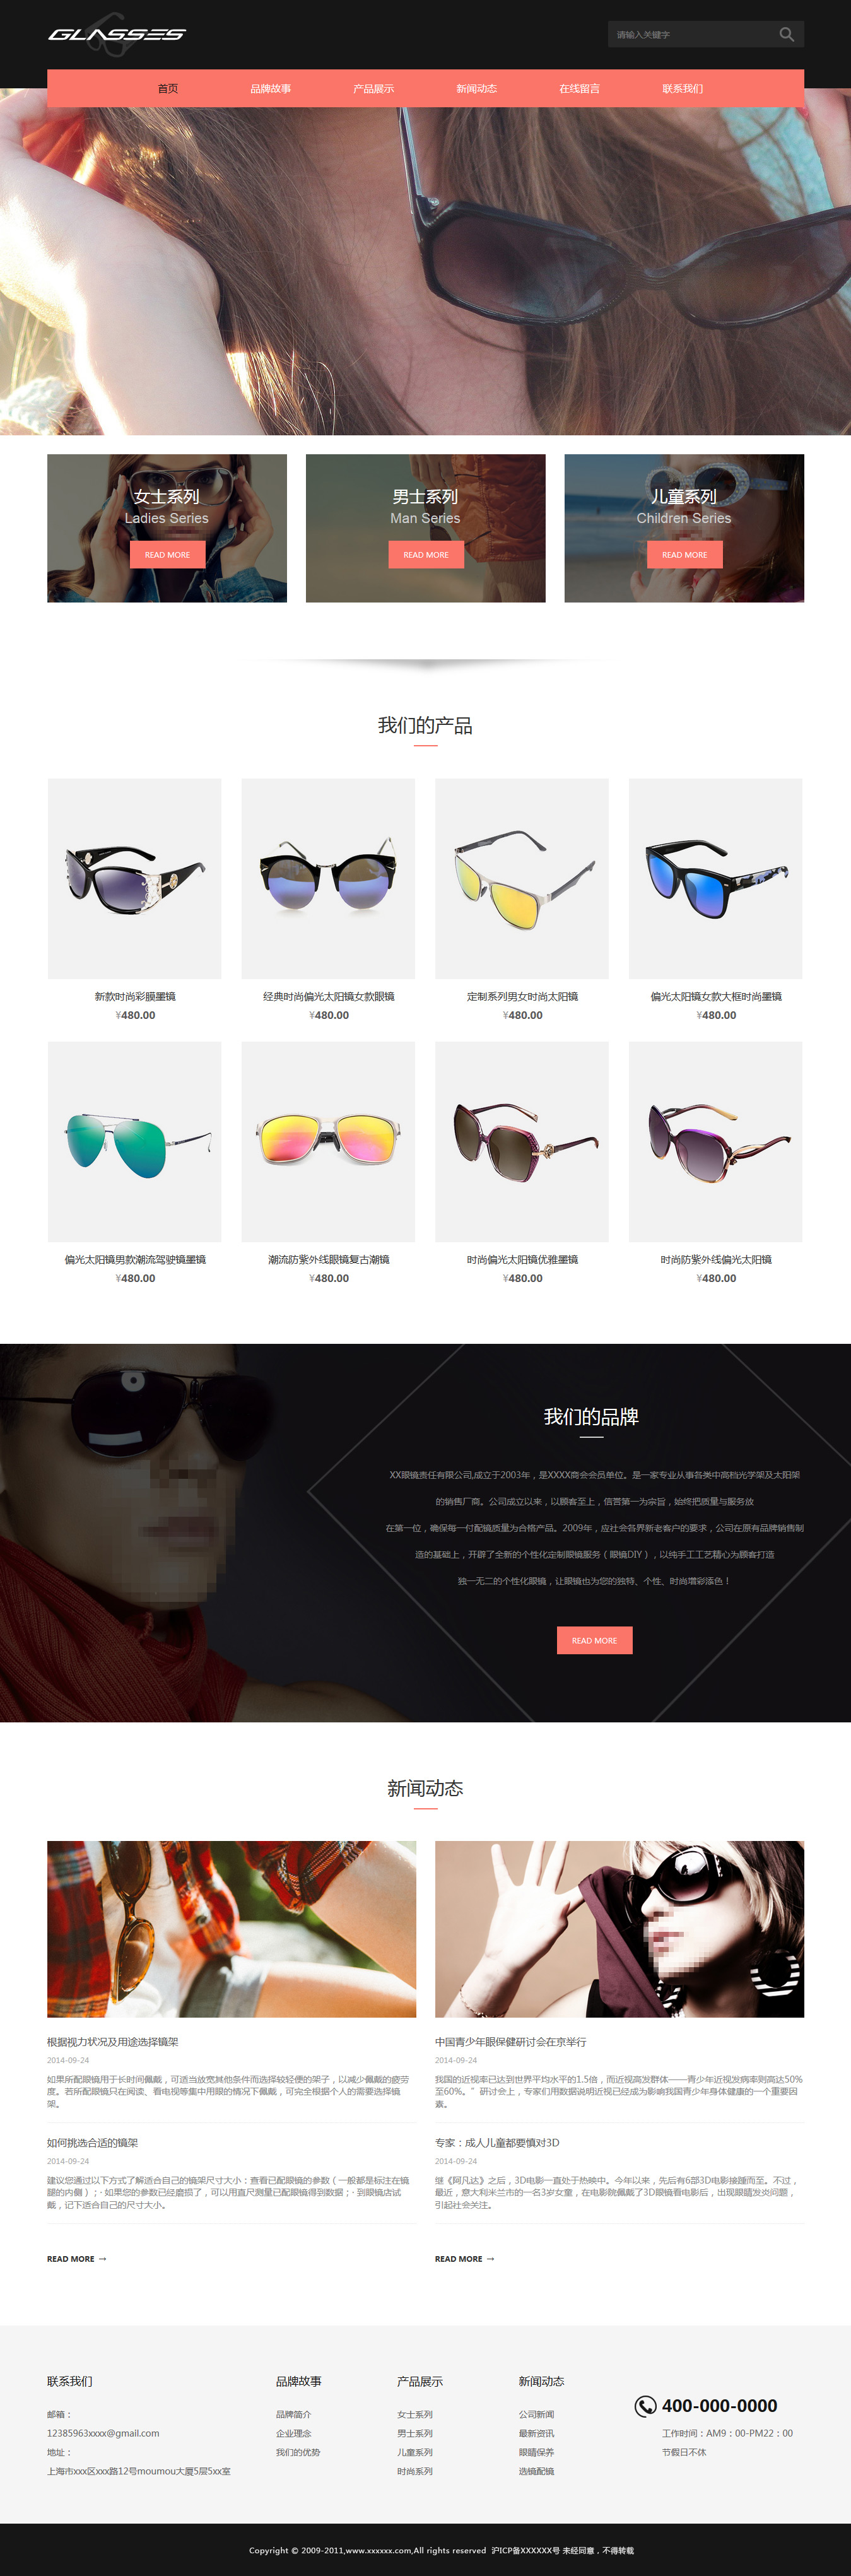 眼镜网站模板-glasses-1031378